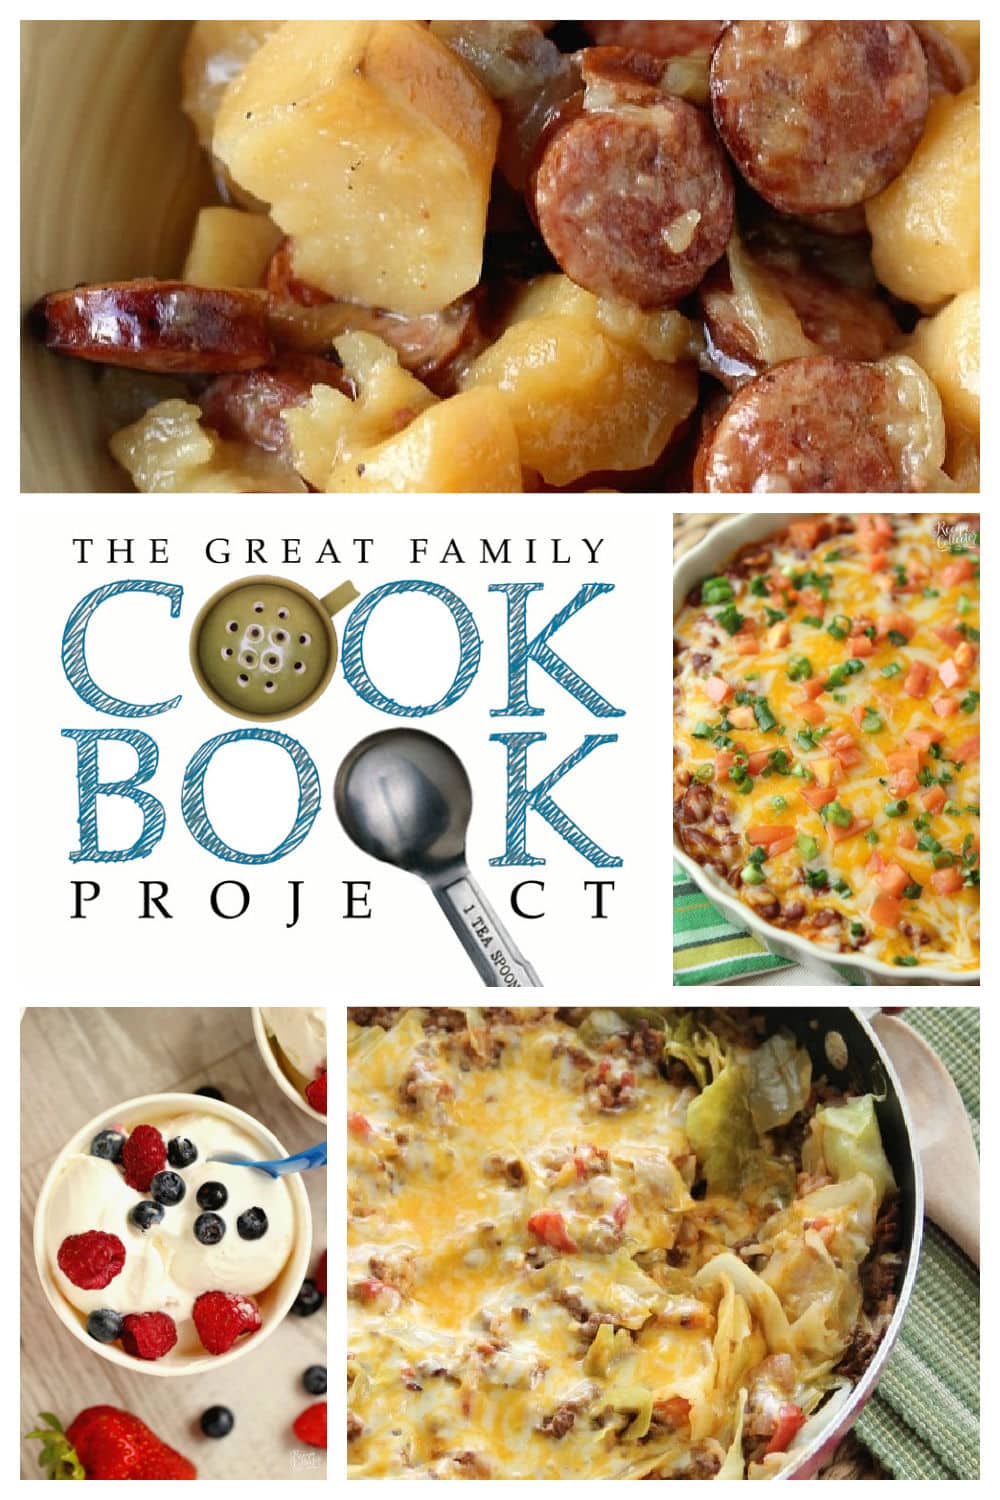 https://www.diaryofarecipecollector.com/wp-content/uploads/2021/04/family-cookbook-project-pin.jpeg